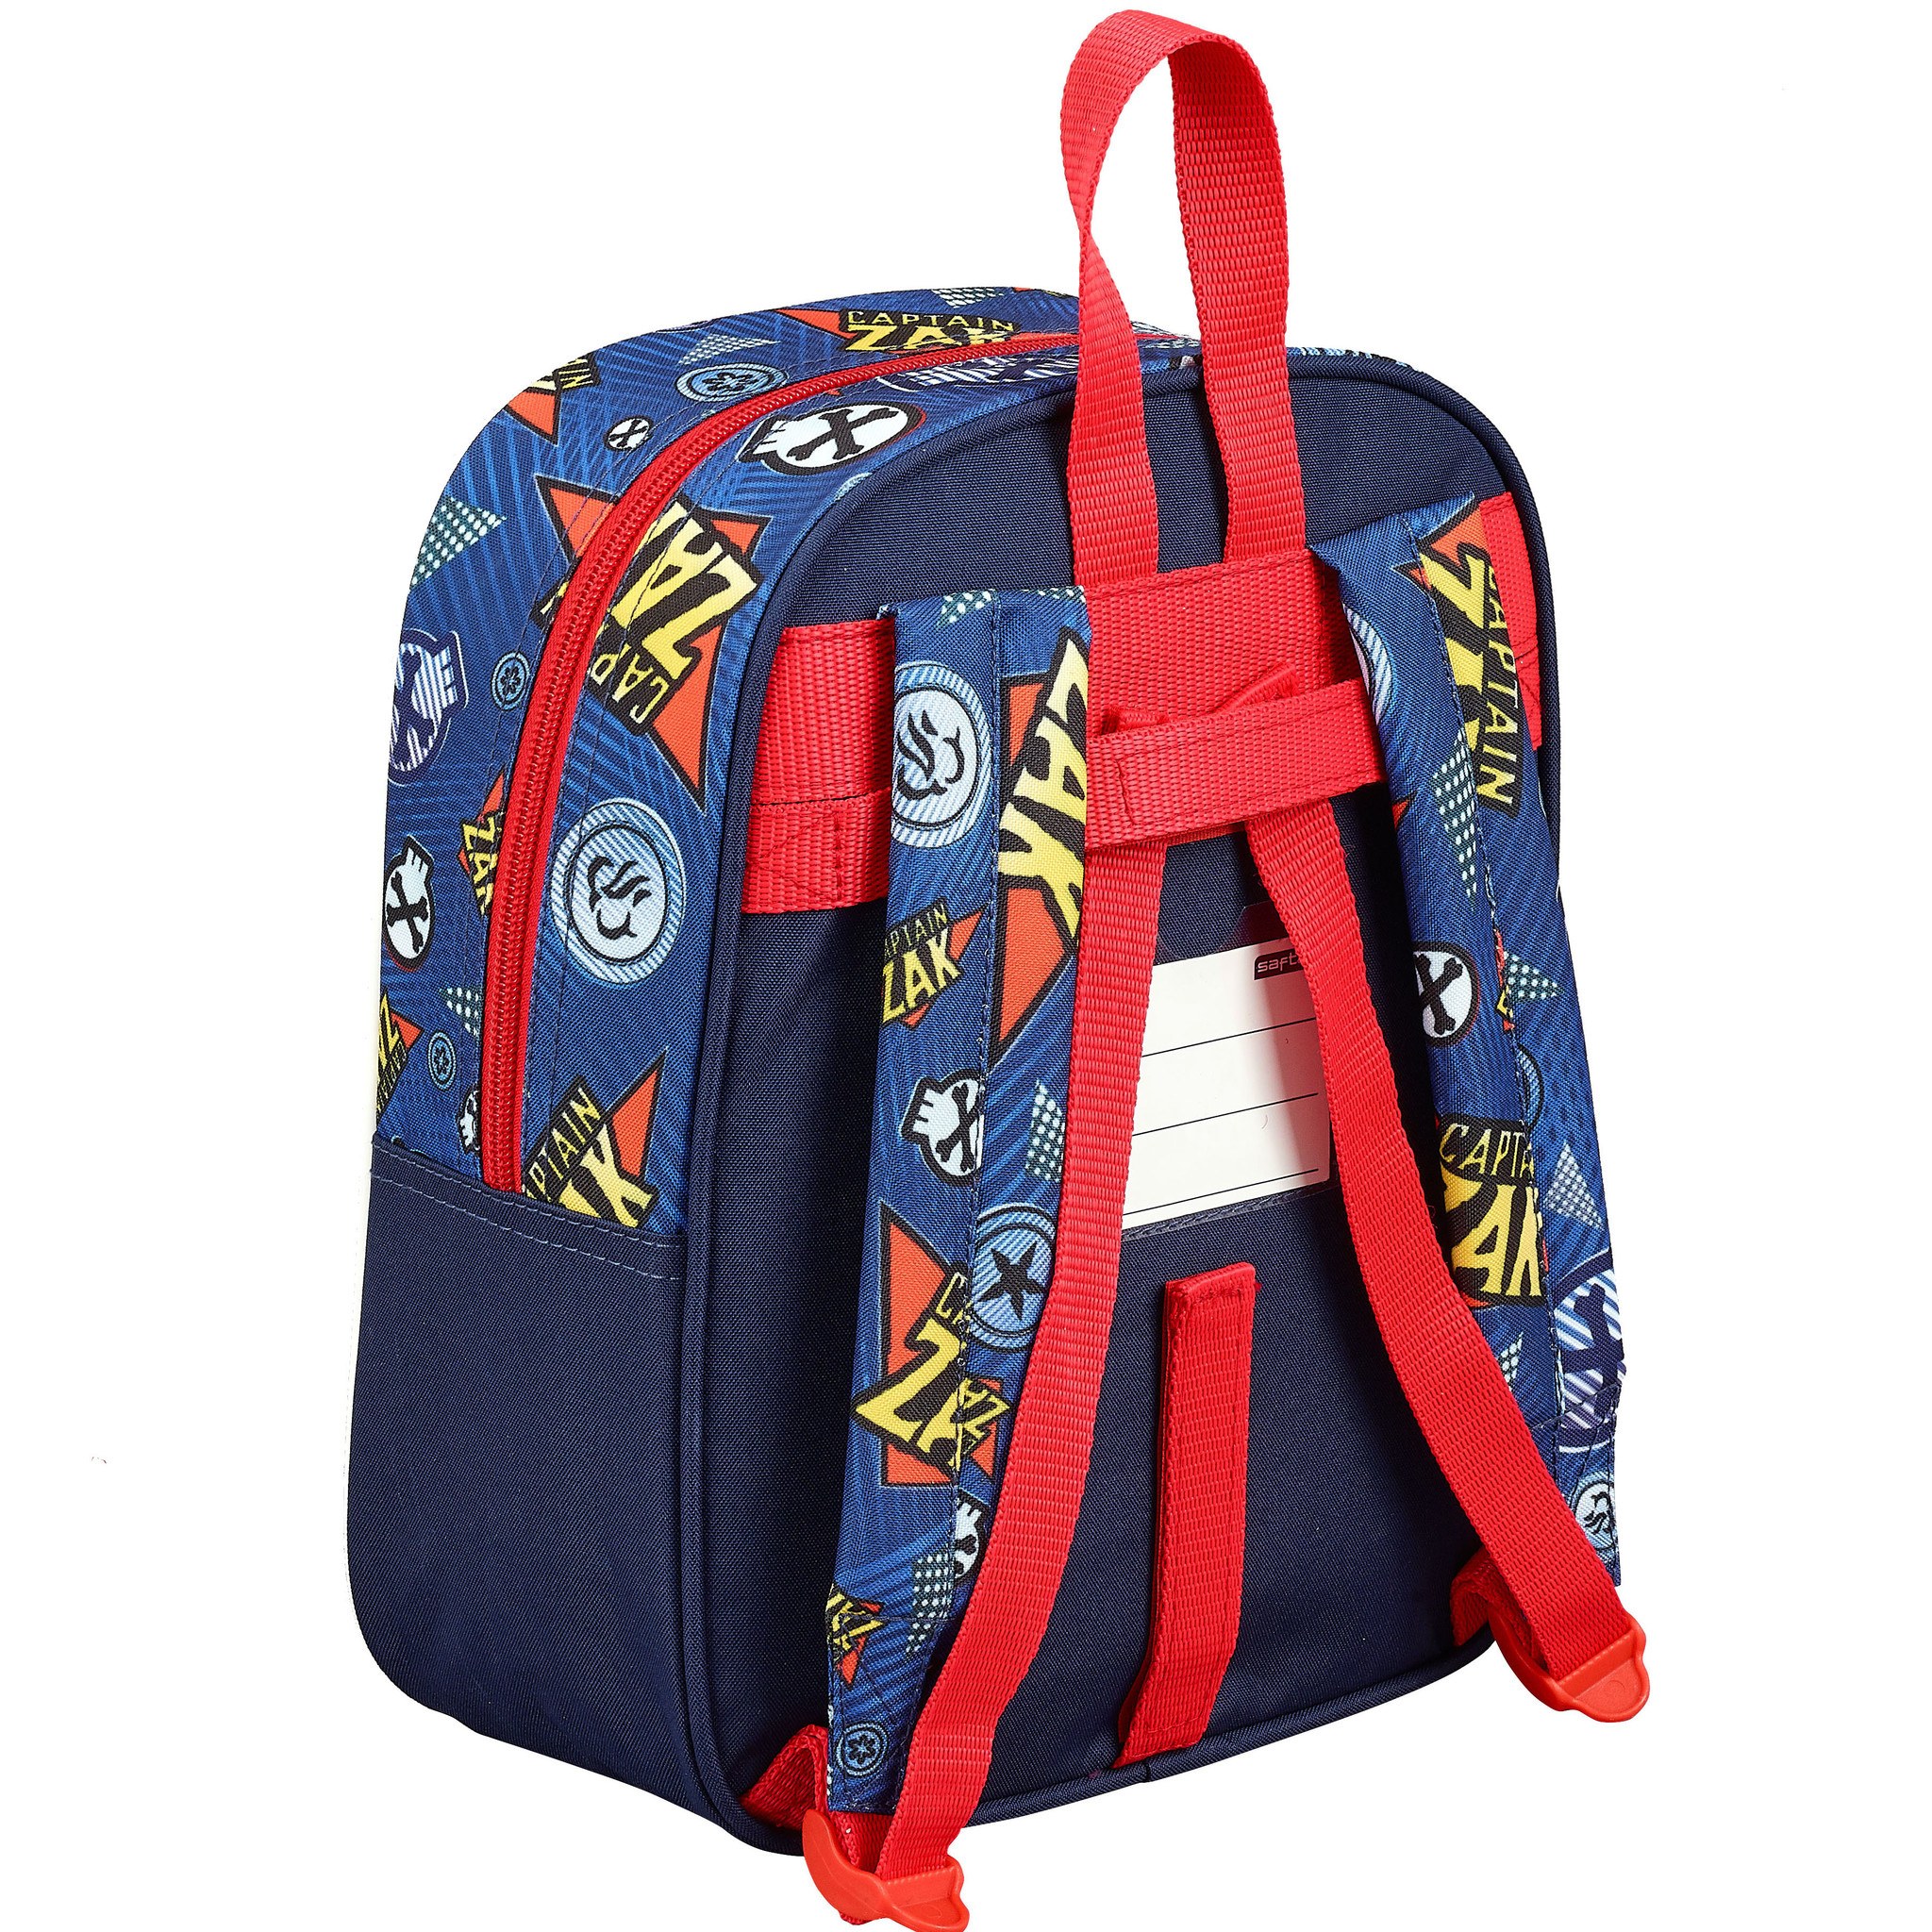 Zak Storm Captain Bag - backpack - 27 cm - Blue